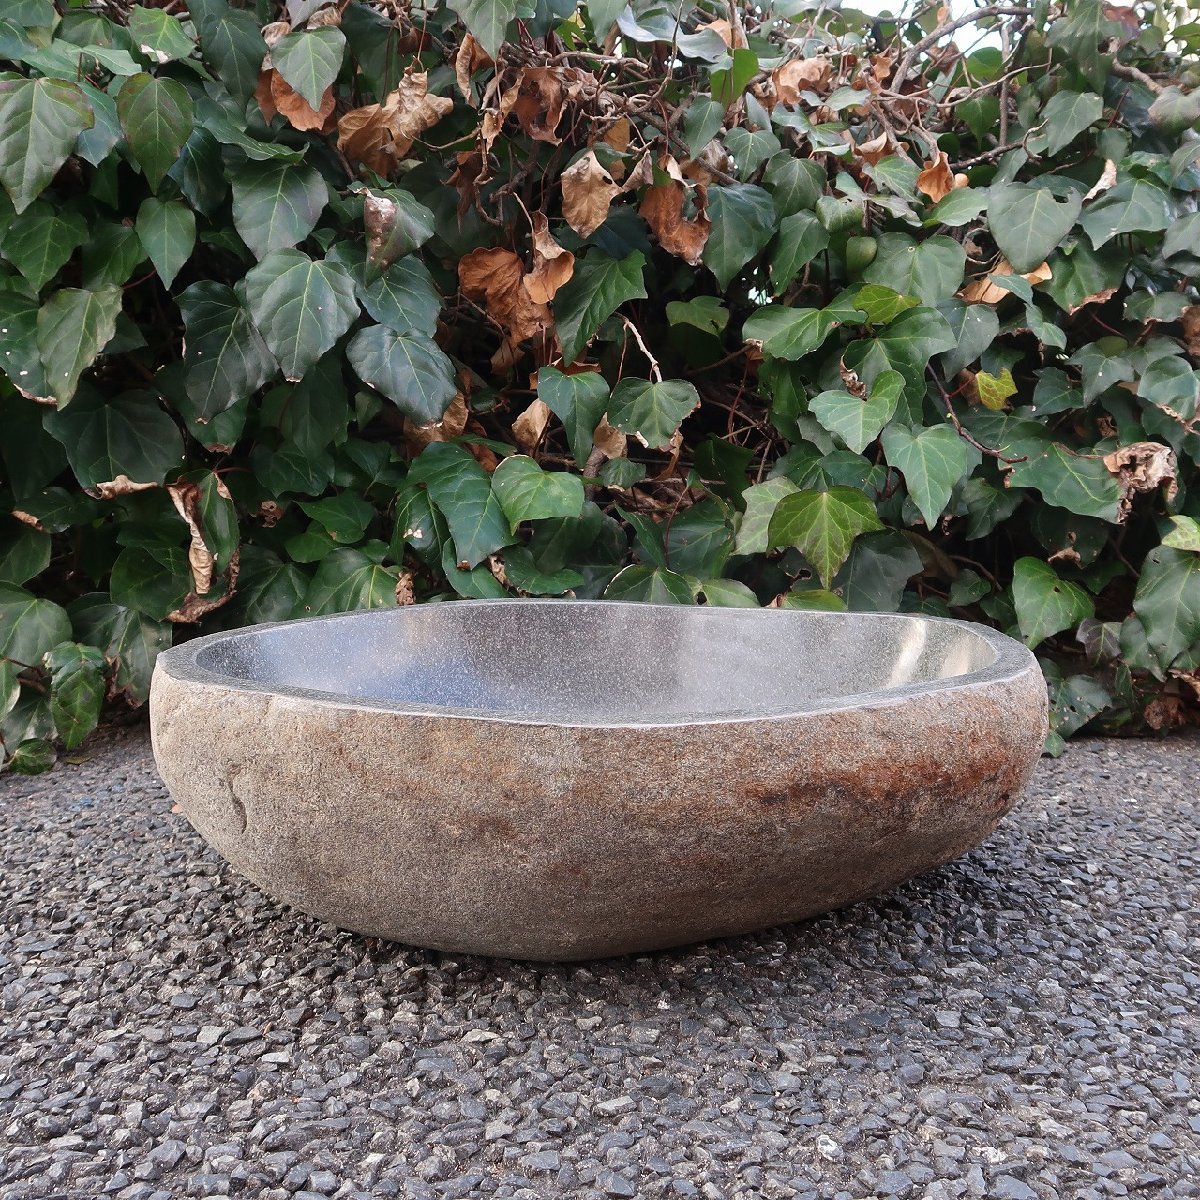  natural stone ...... hand water pot Rebirth tone L 52.5X44 Tsukuba . water lily pot .... pot me Dakar pot medaka pot garden tsubo garden 250927